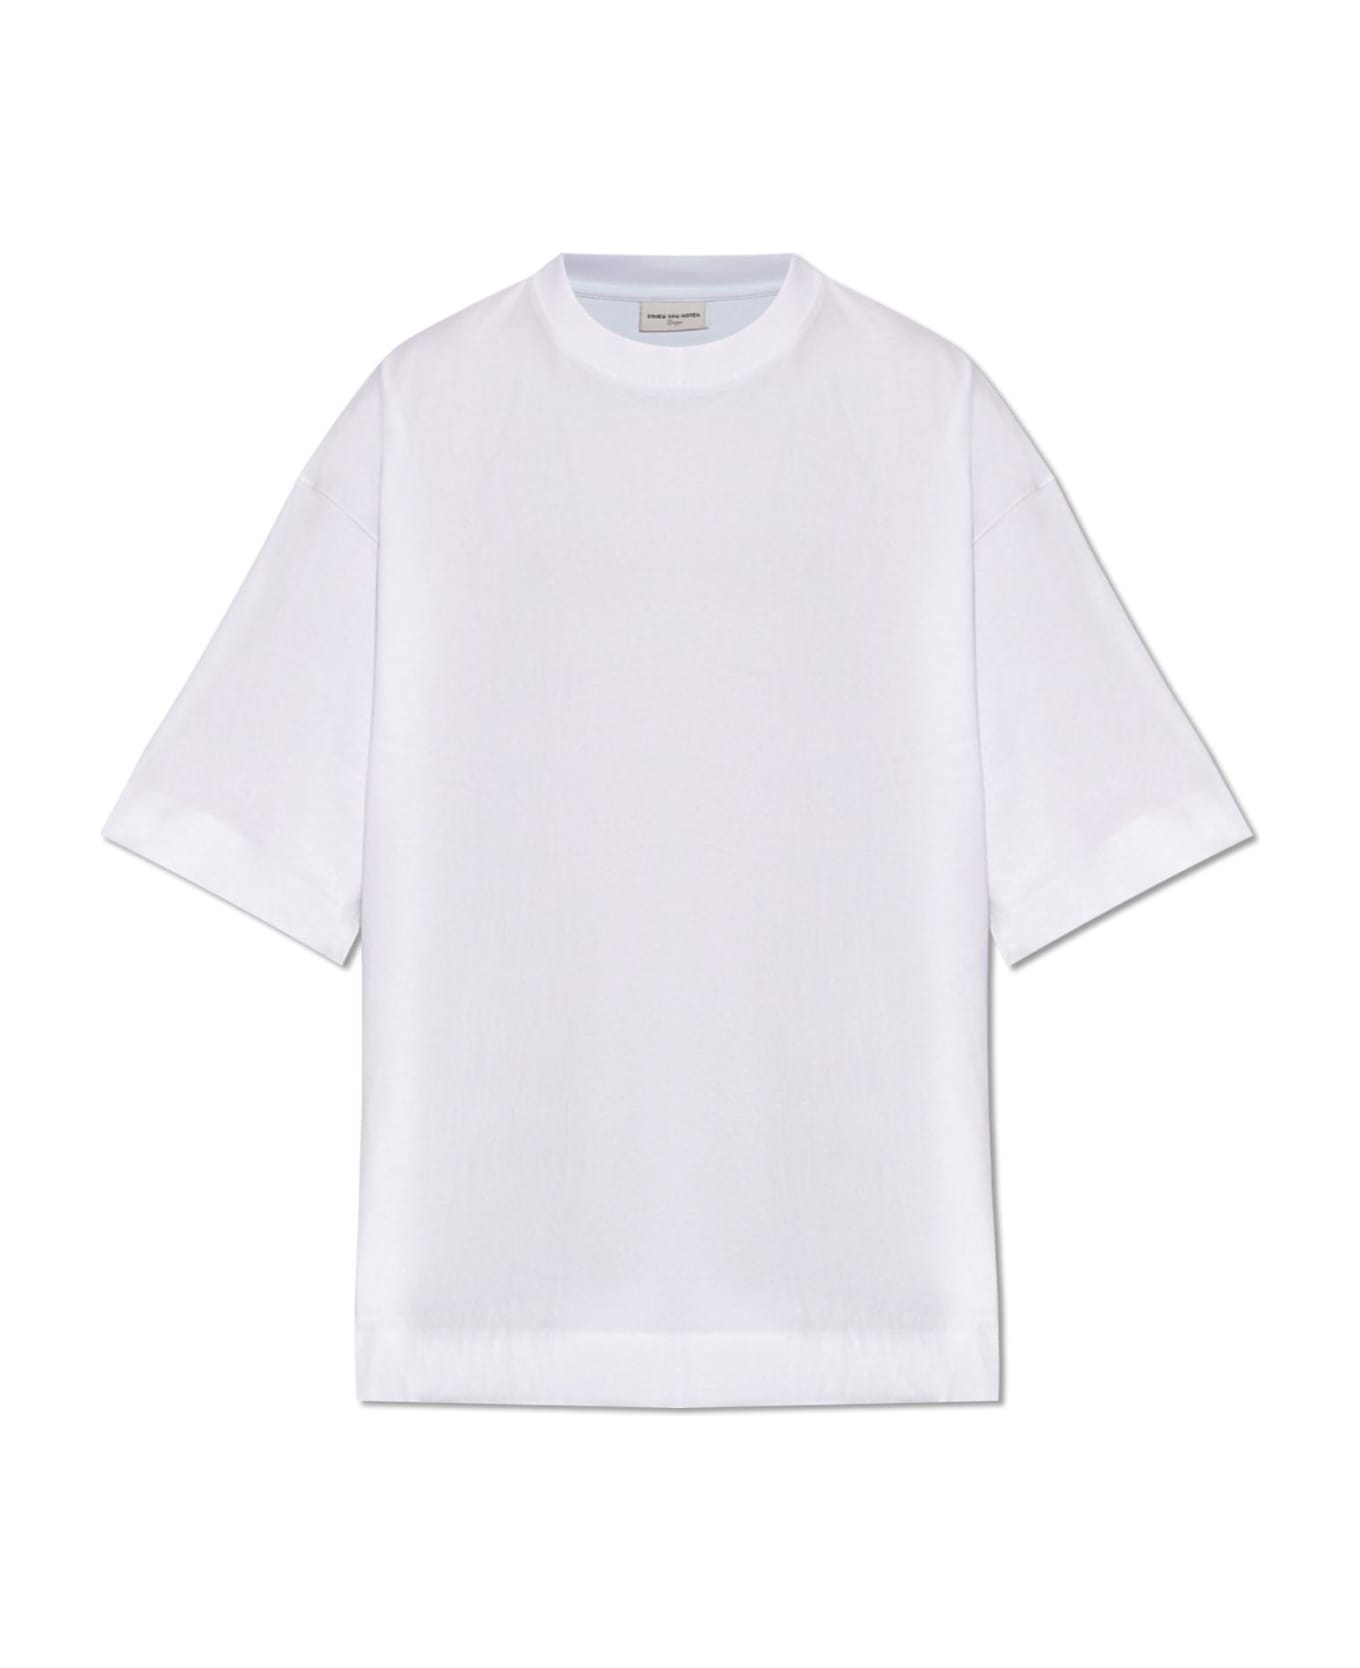 Dries Van Noten Cotton T-shirt - White